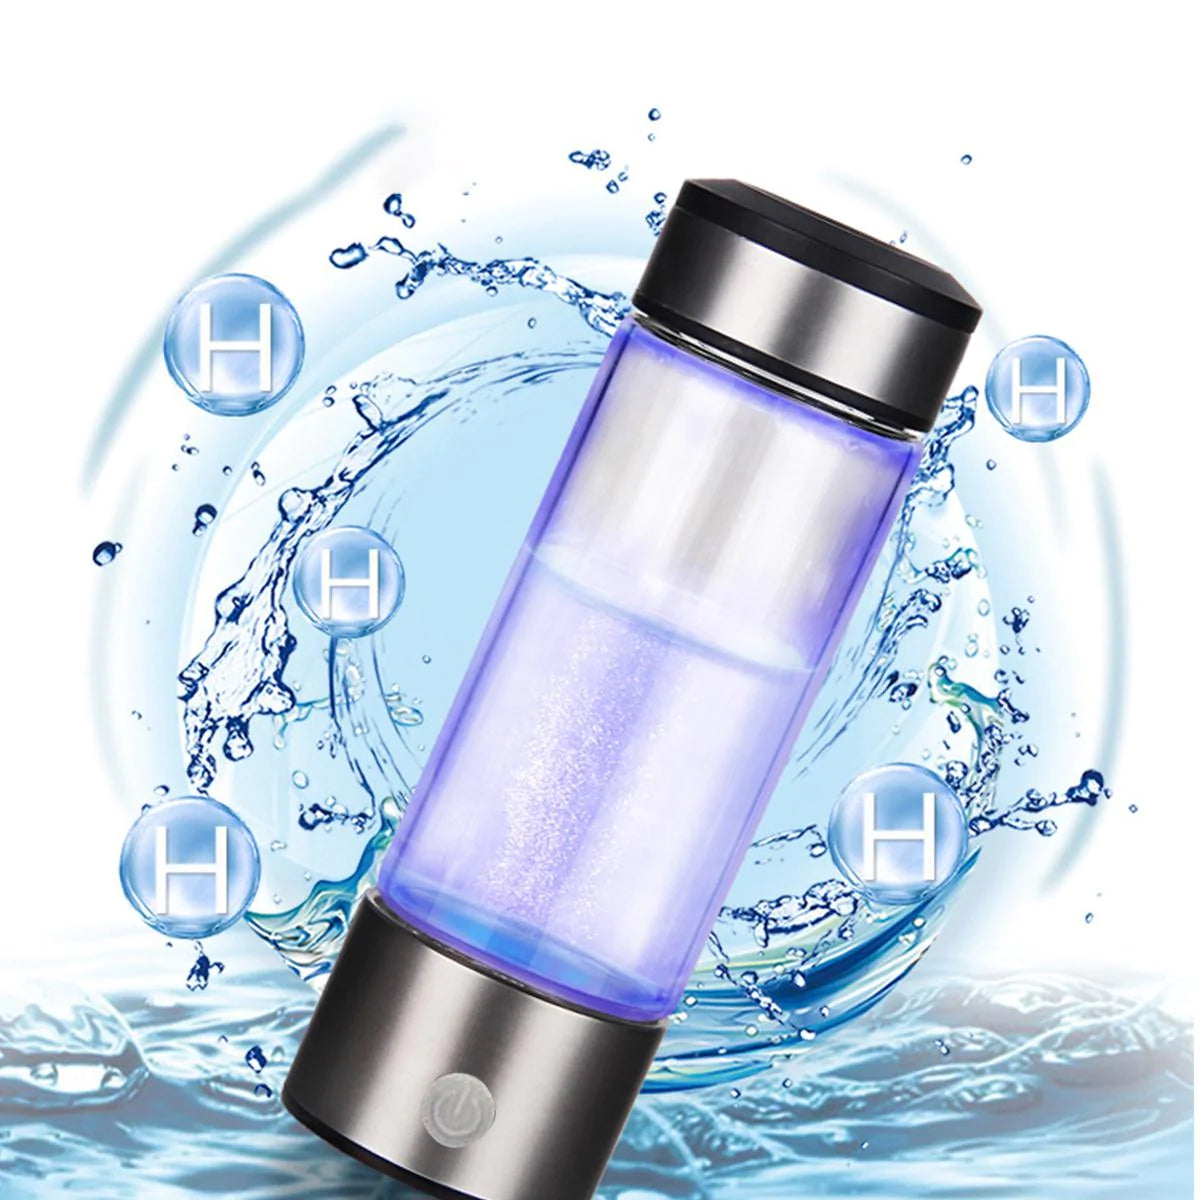 Hydrogen Water Bottle – HushVolta